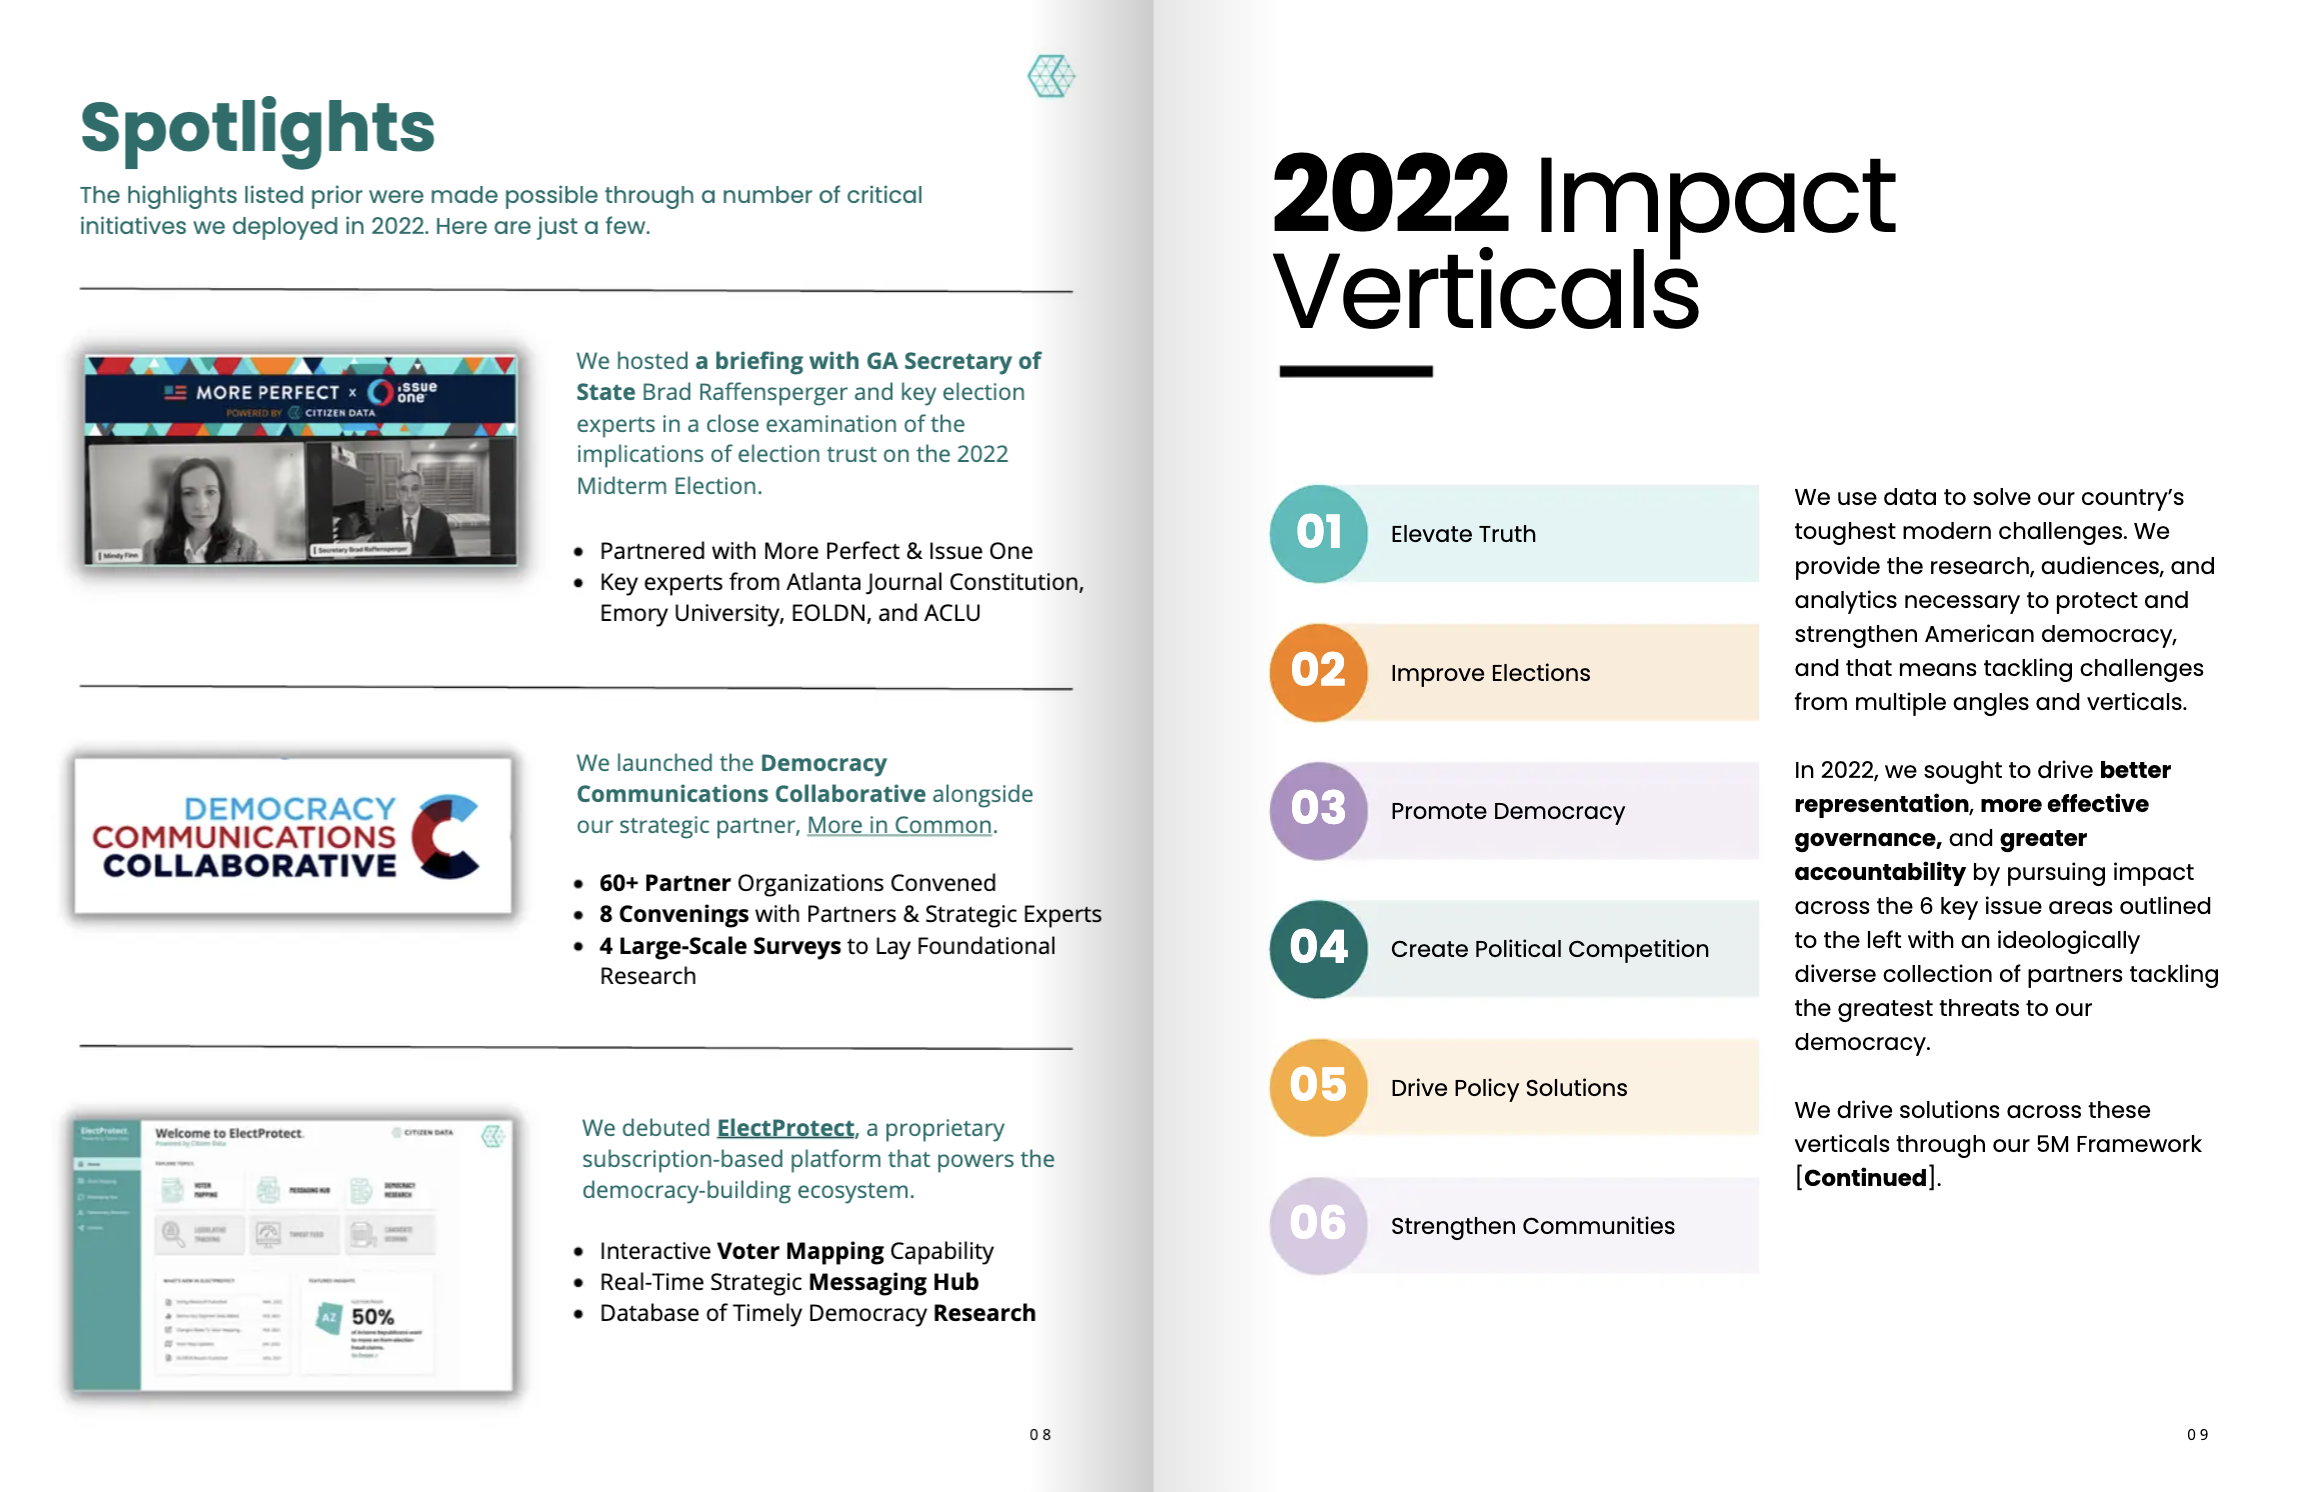 Citizen Data's 2022 Impact Report